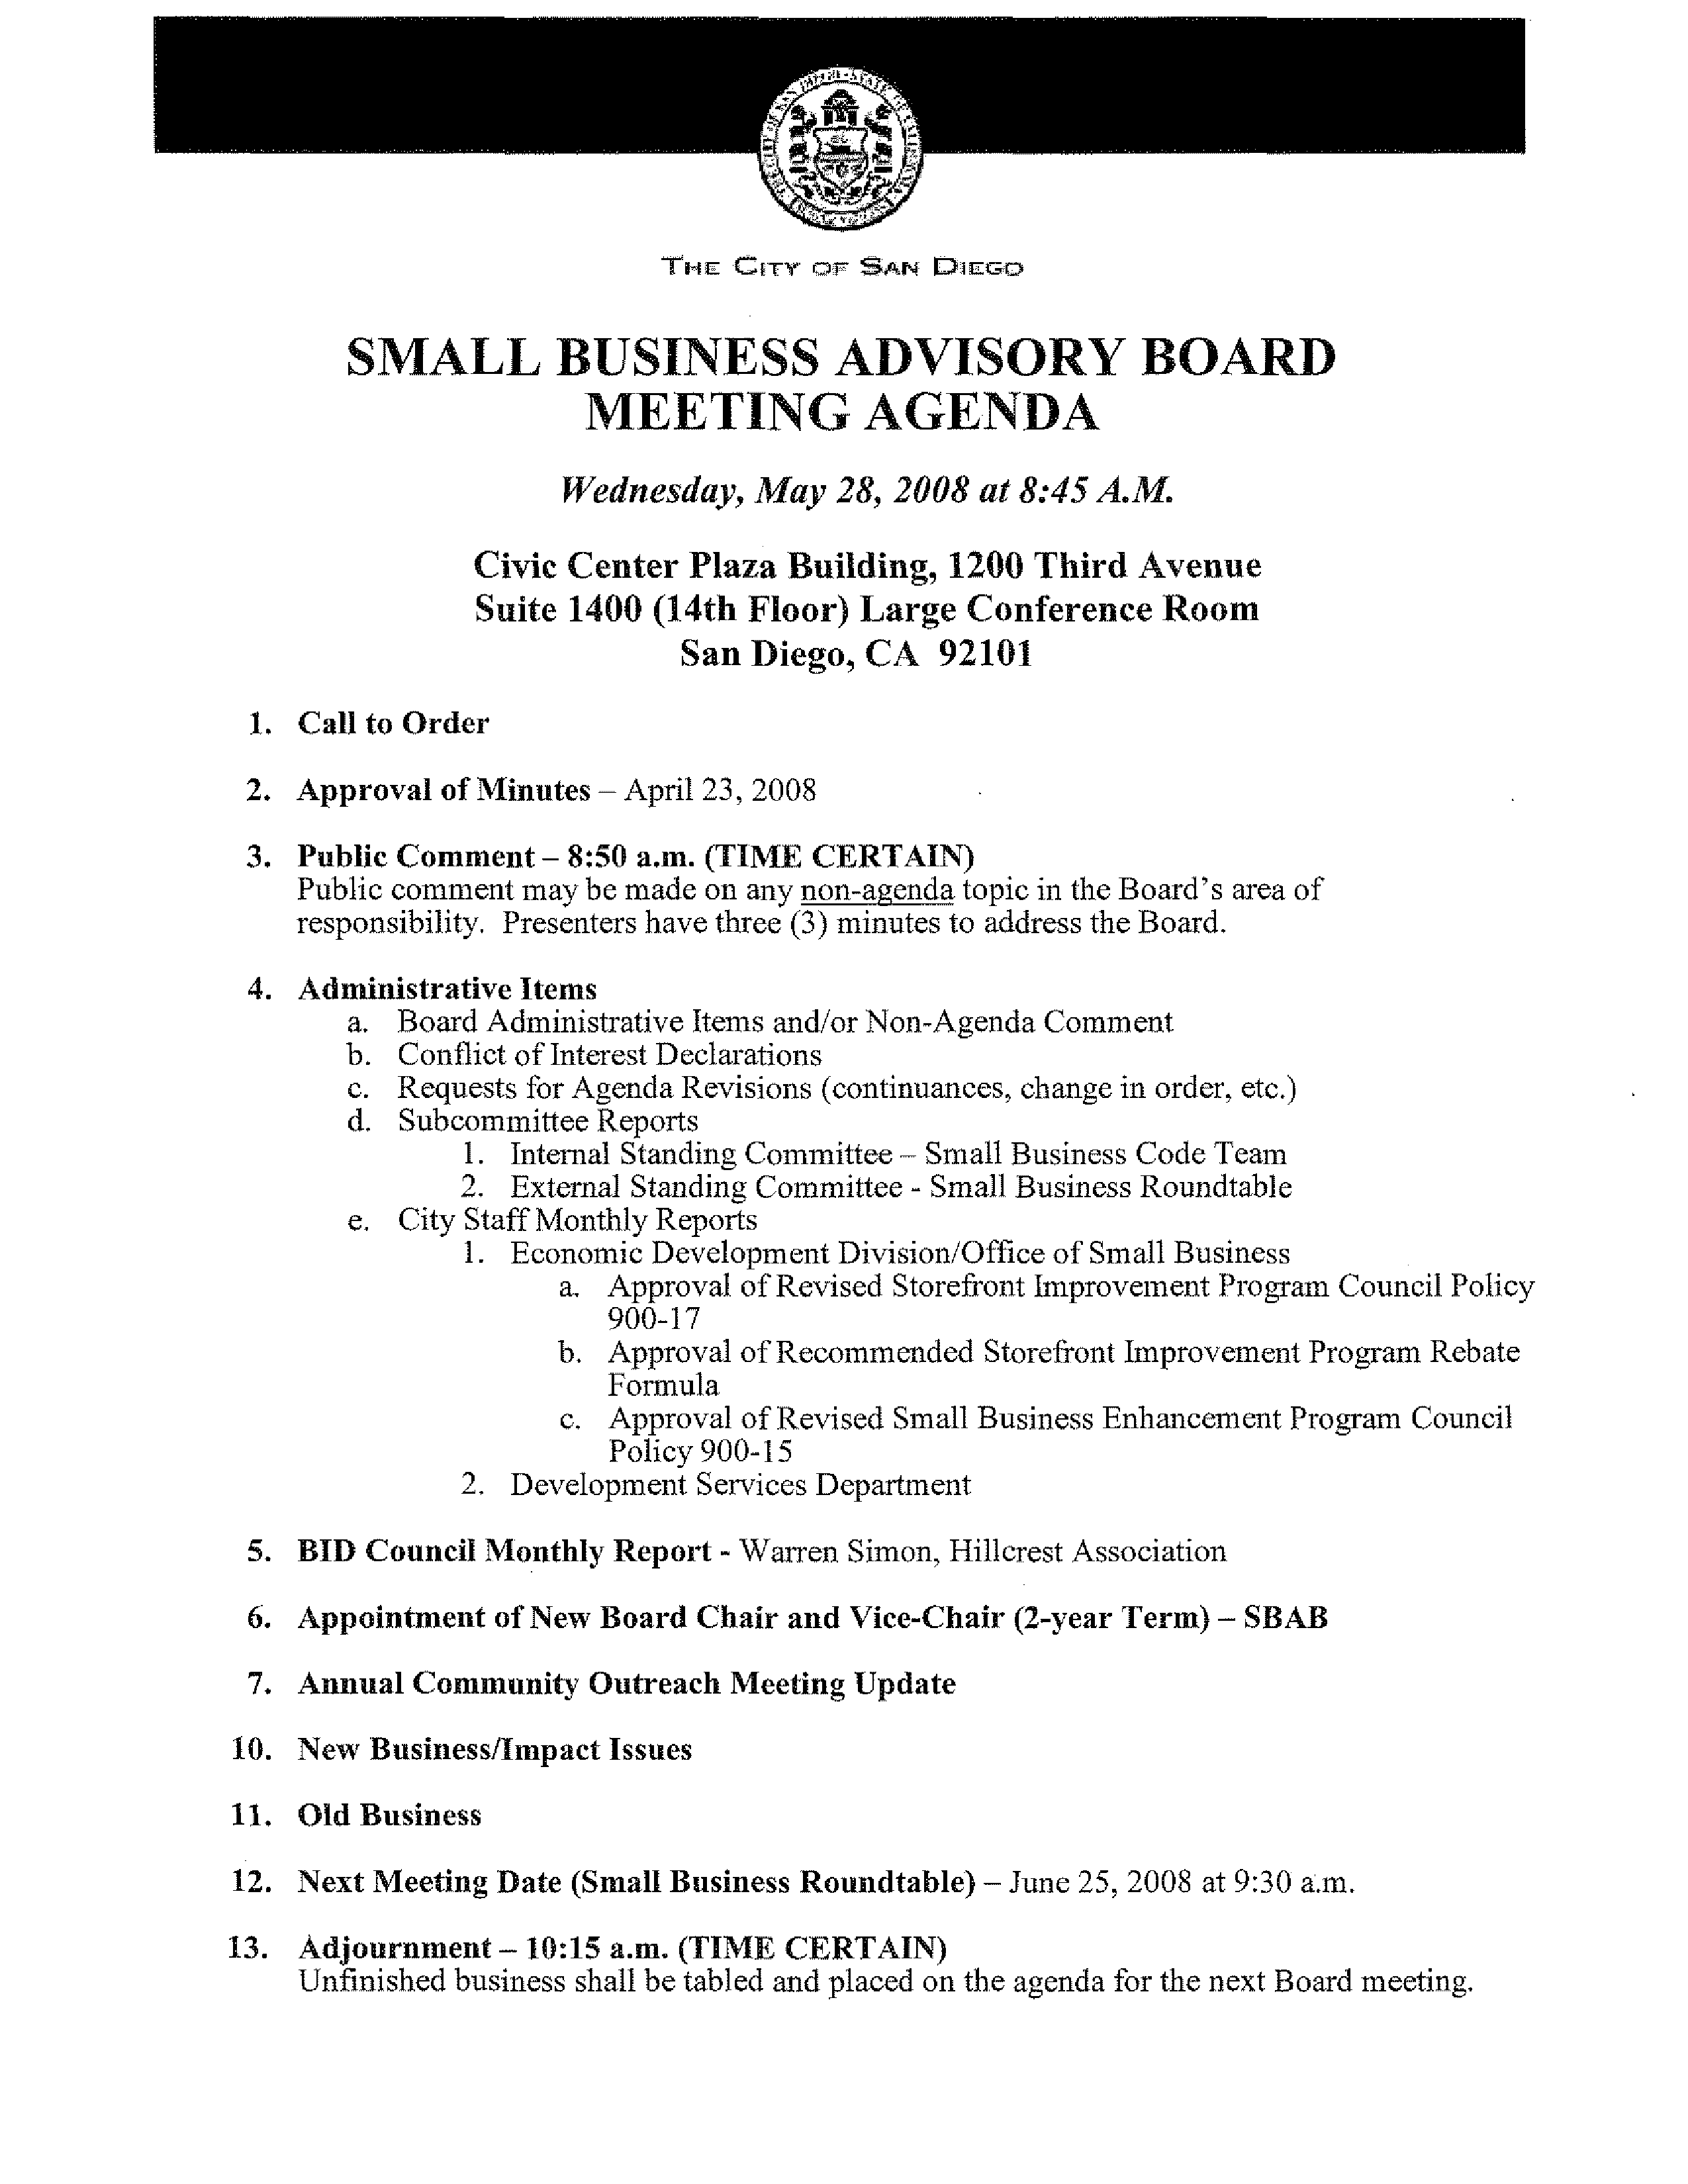 small business board meeting agenda plantilla imagen principal